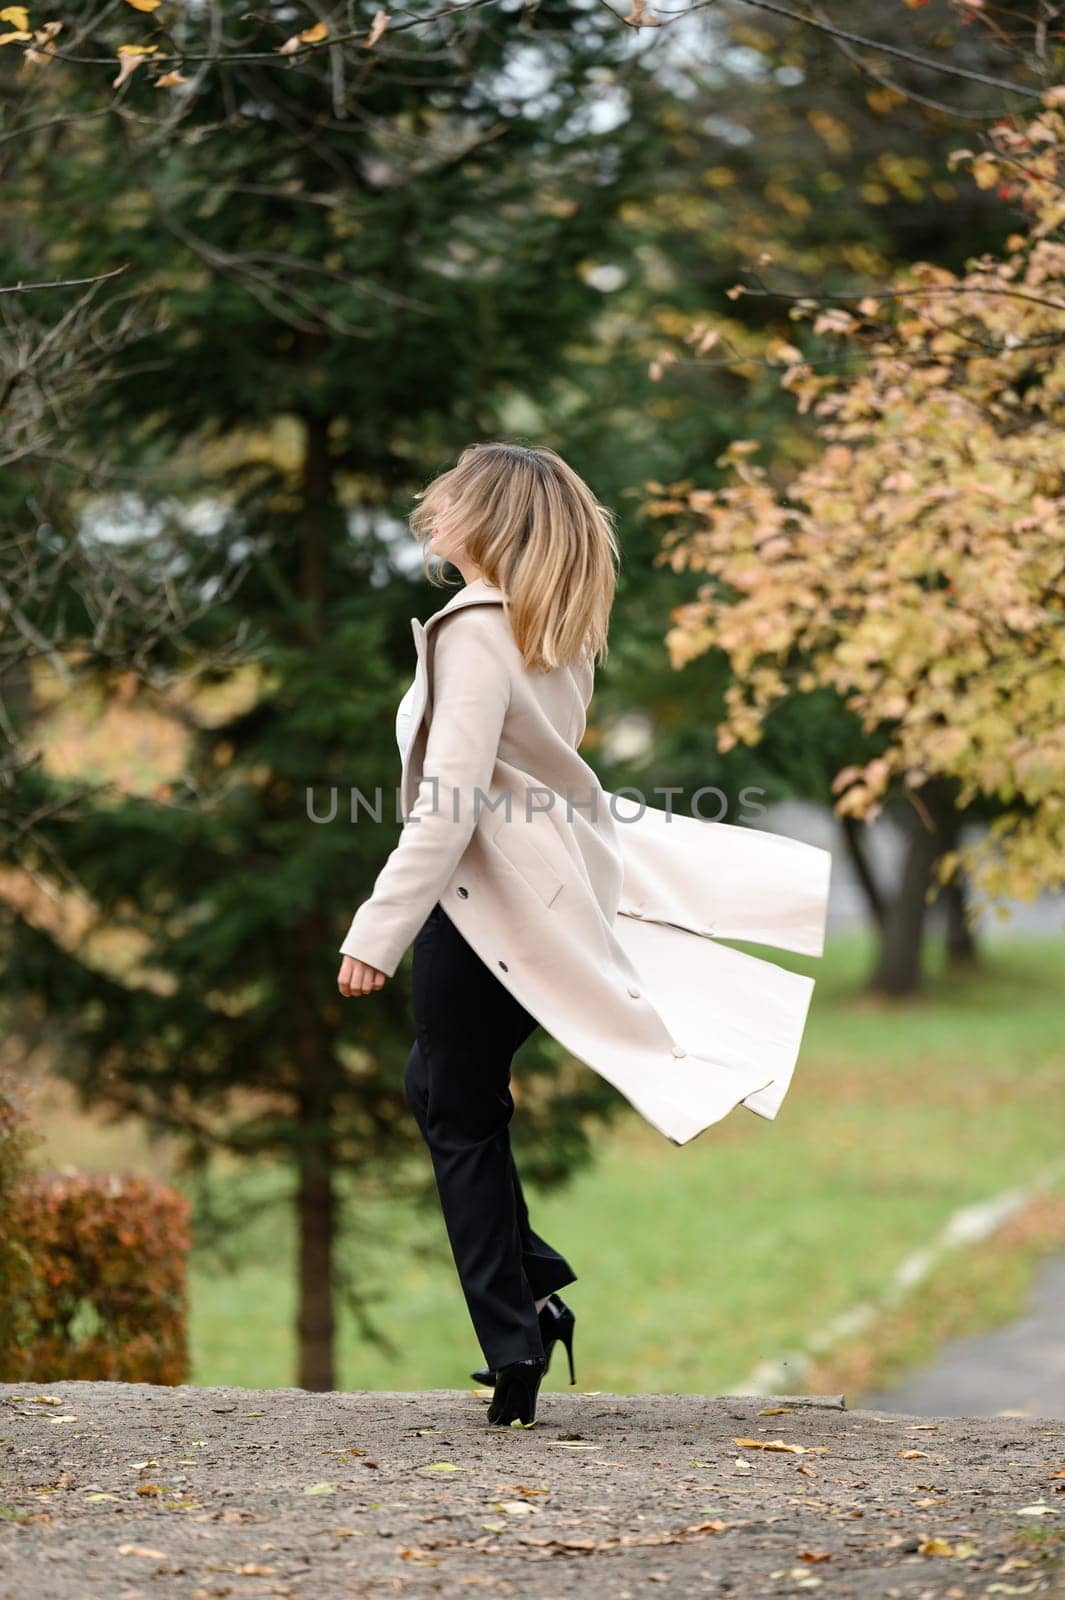 A young girl in an autumn park on a photo shoot, a theme for an autumn calendar. by Niko_Cingaryuk